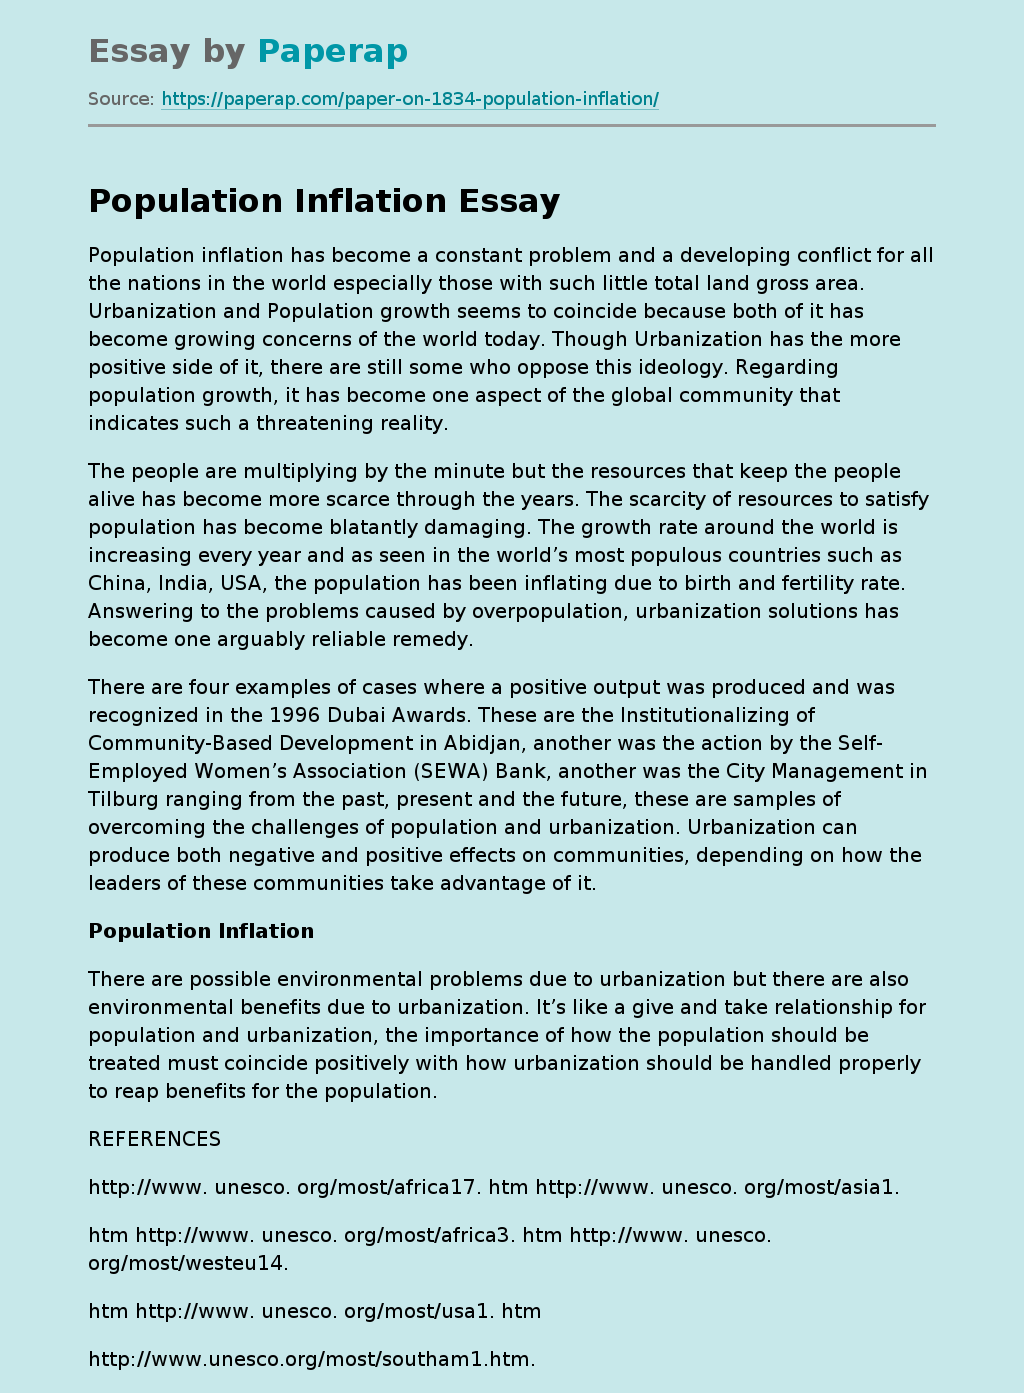 Population Inflation